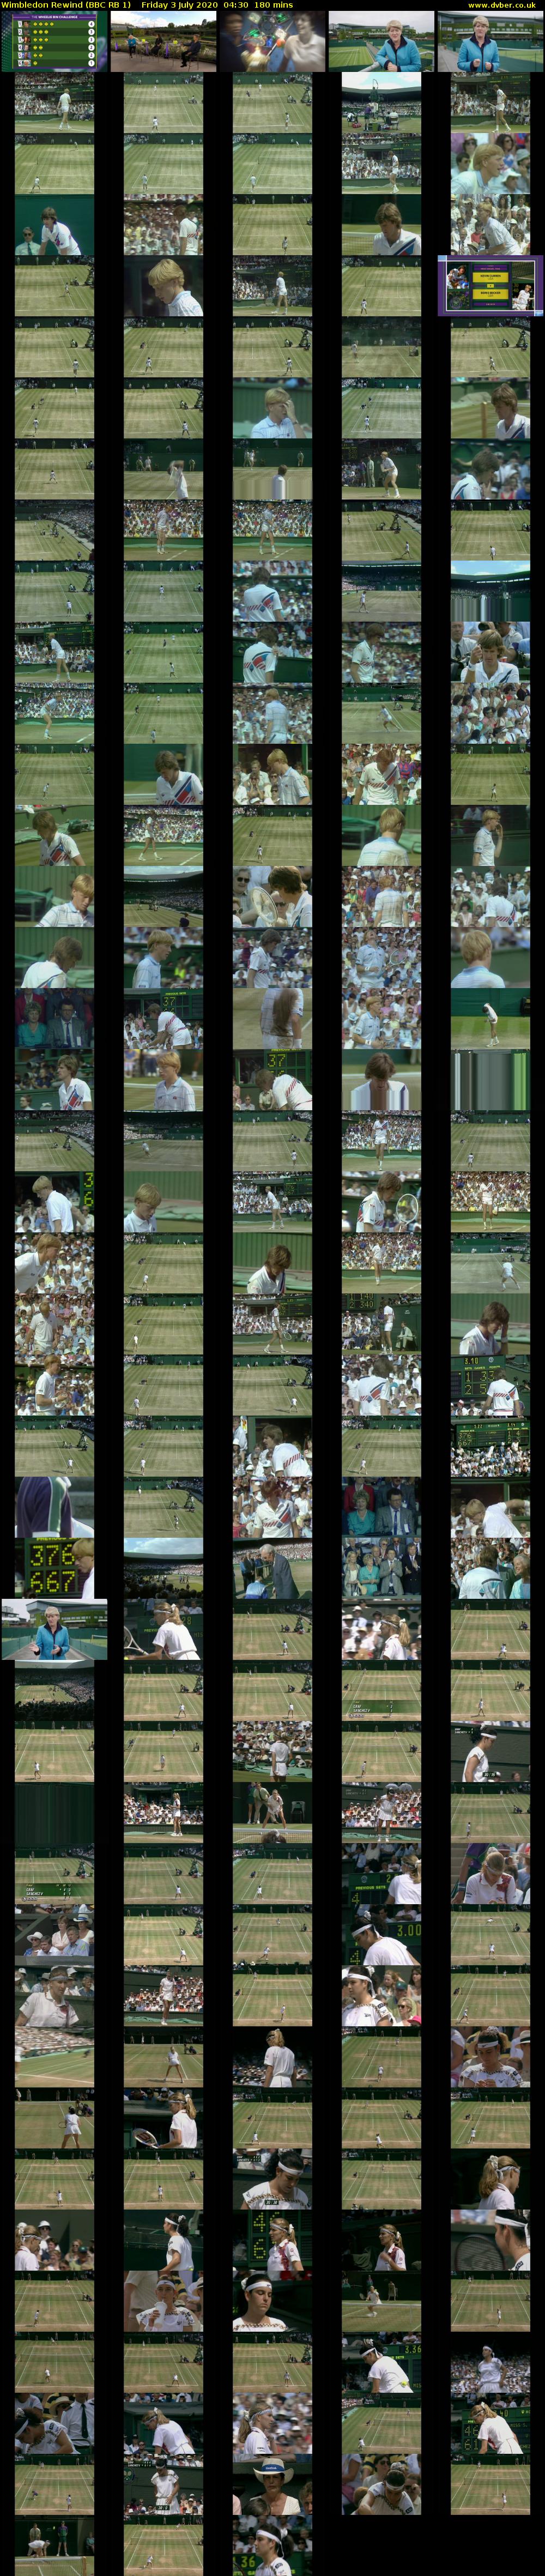 Wimbledon Rewind (BBC RB 1) Friday 3 July 2020 04:30 - 07:30